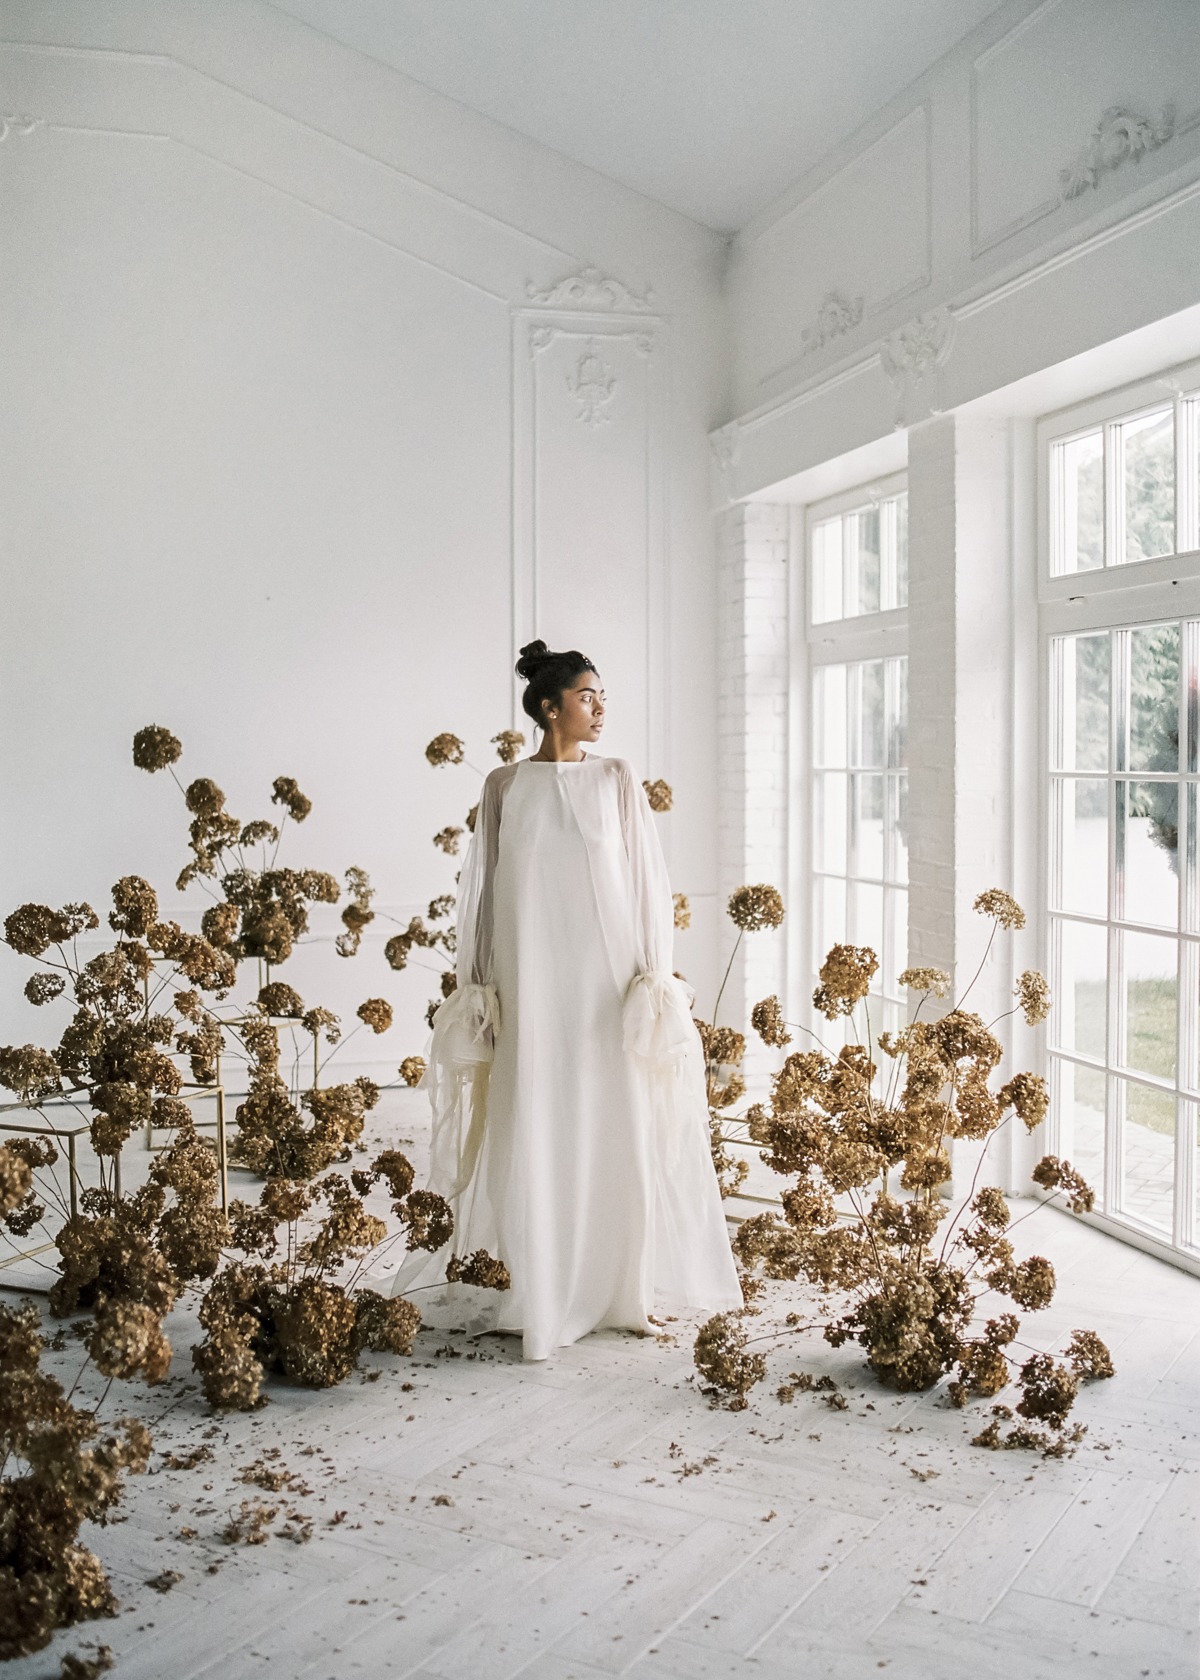 This Gilded Wedding Inspiration Shoot Looks Like A Modern Fairytale